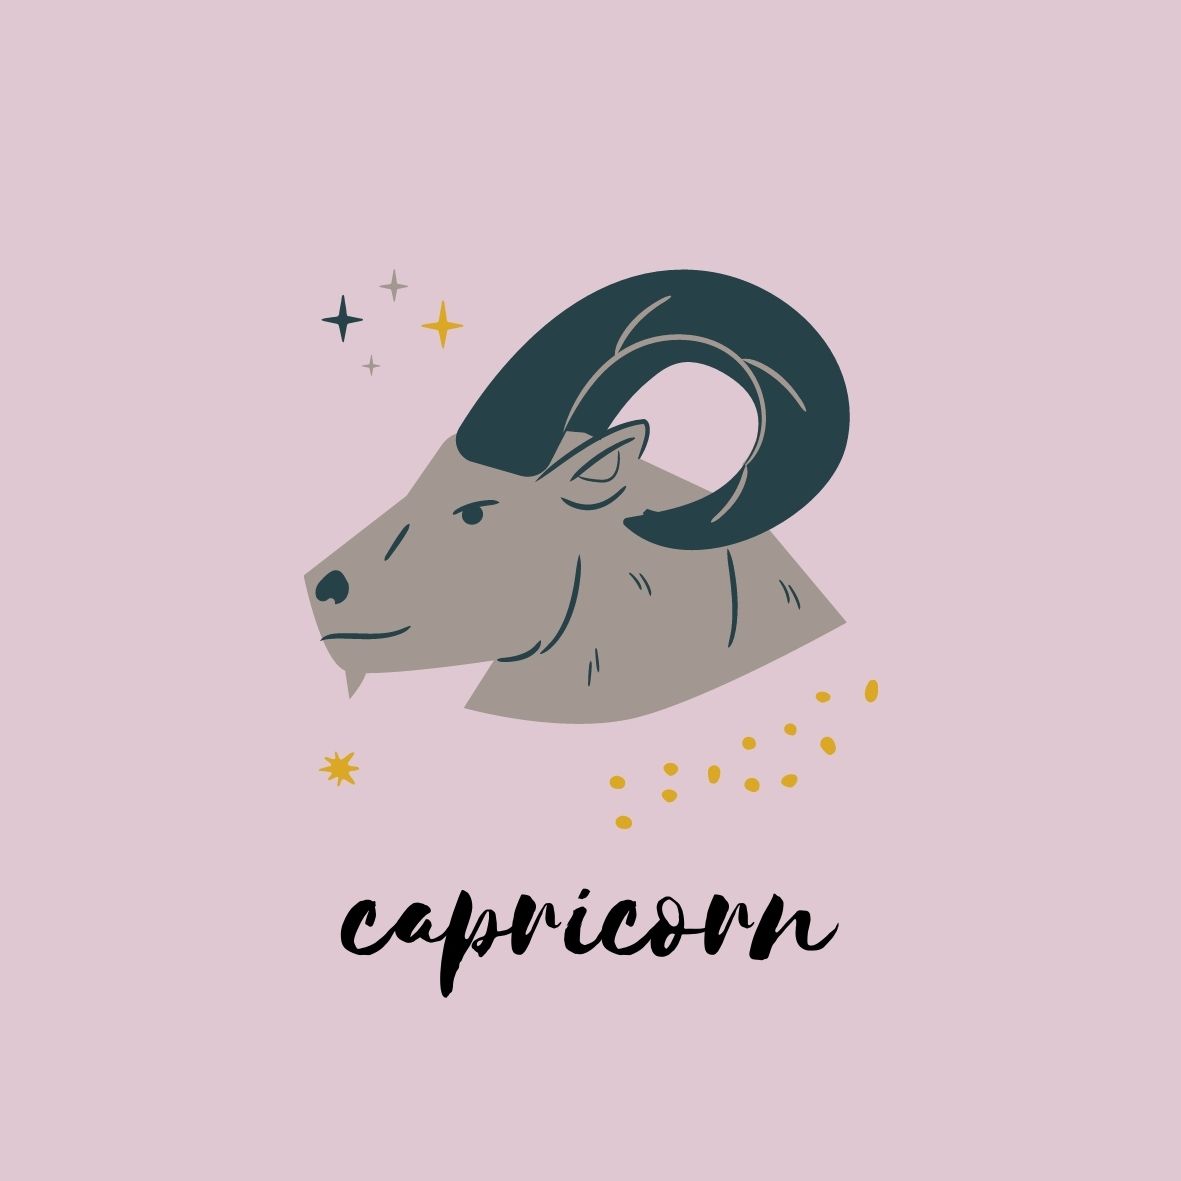 November Horoscope: Capricorn